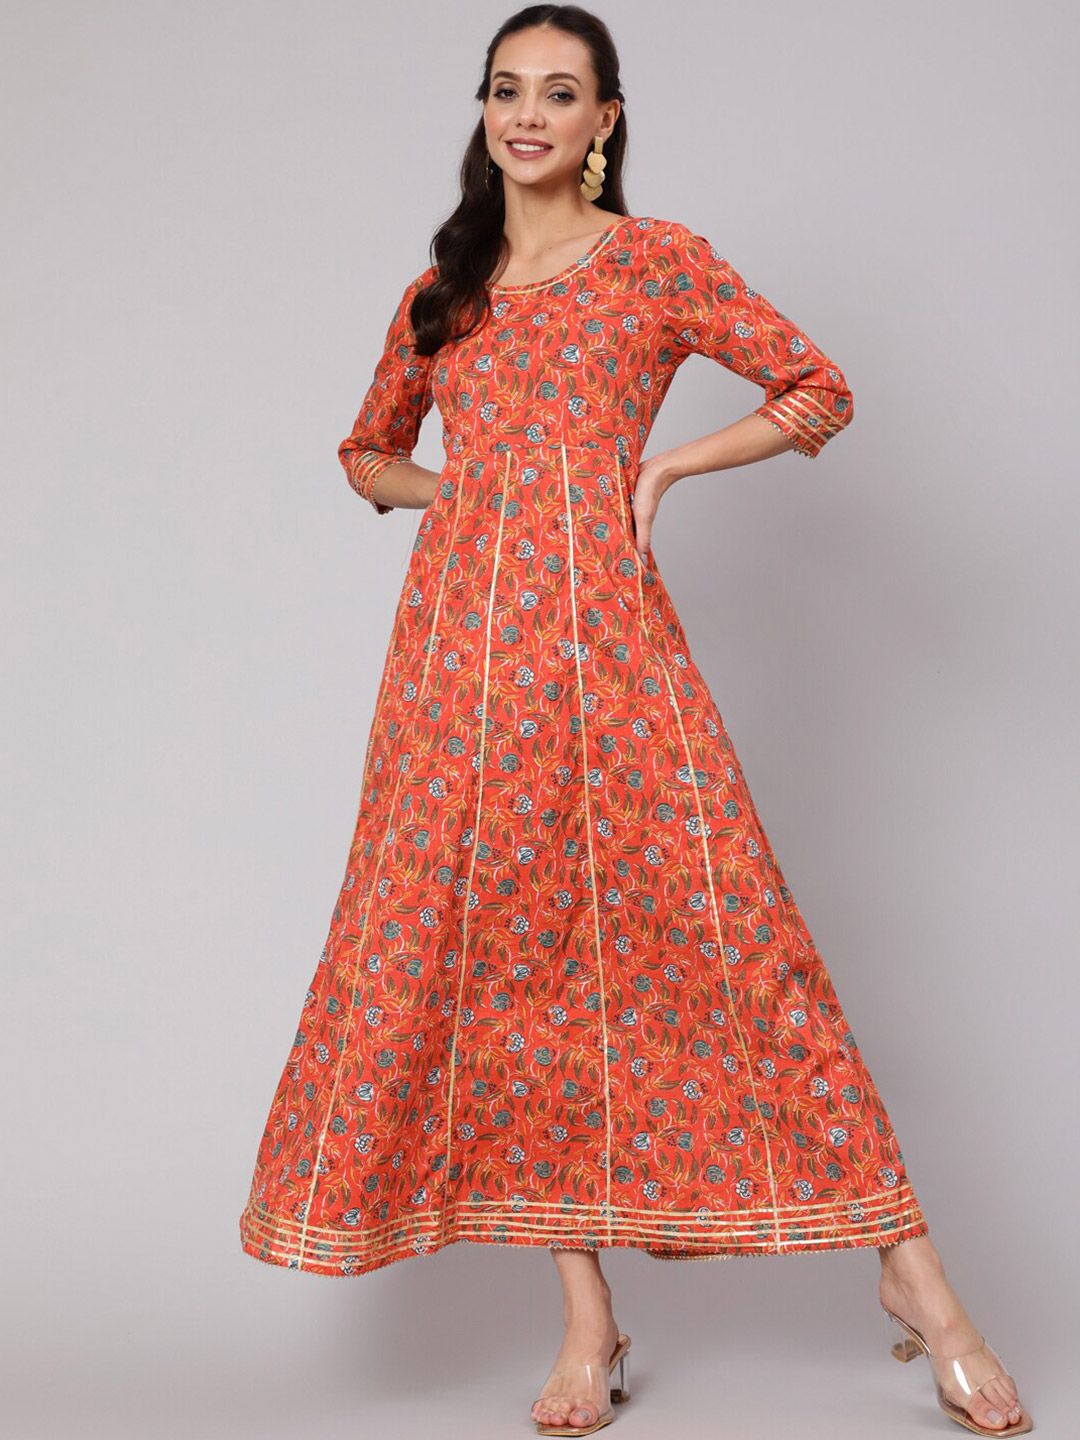 Nayo Orange Ethnic Motifs Ethnic Maxi Dress Price in India